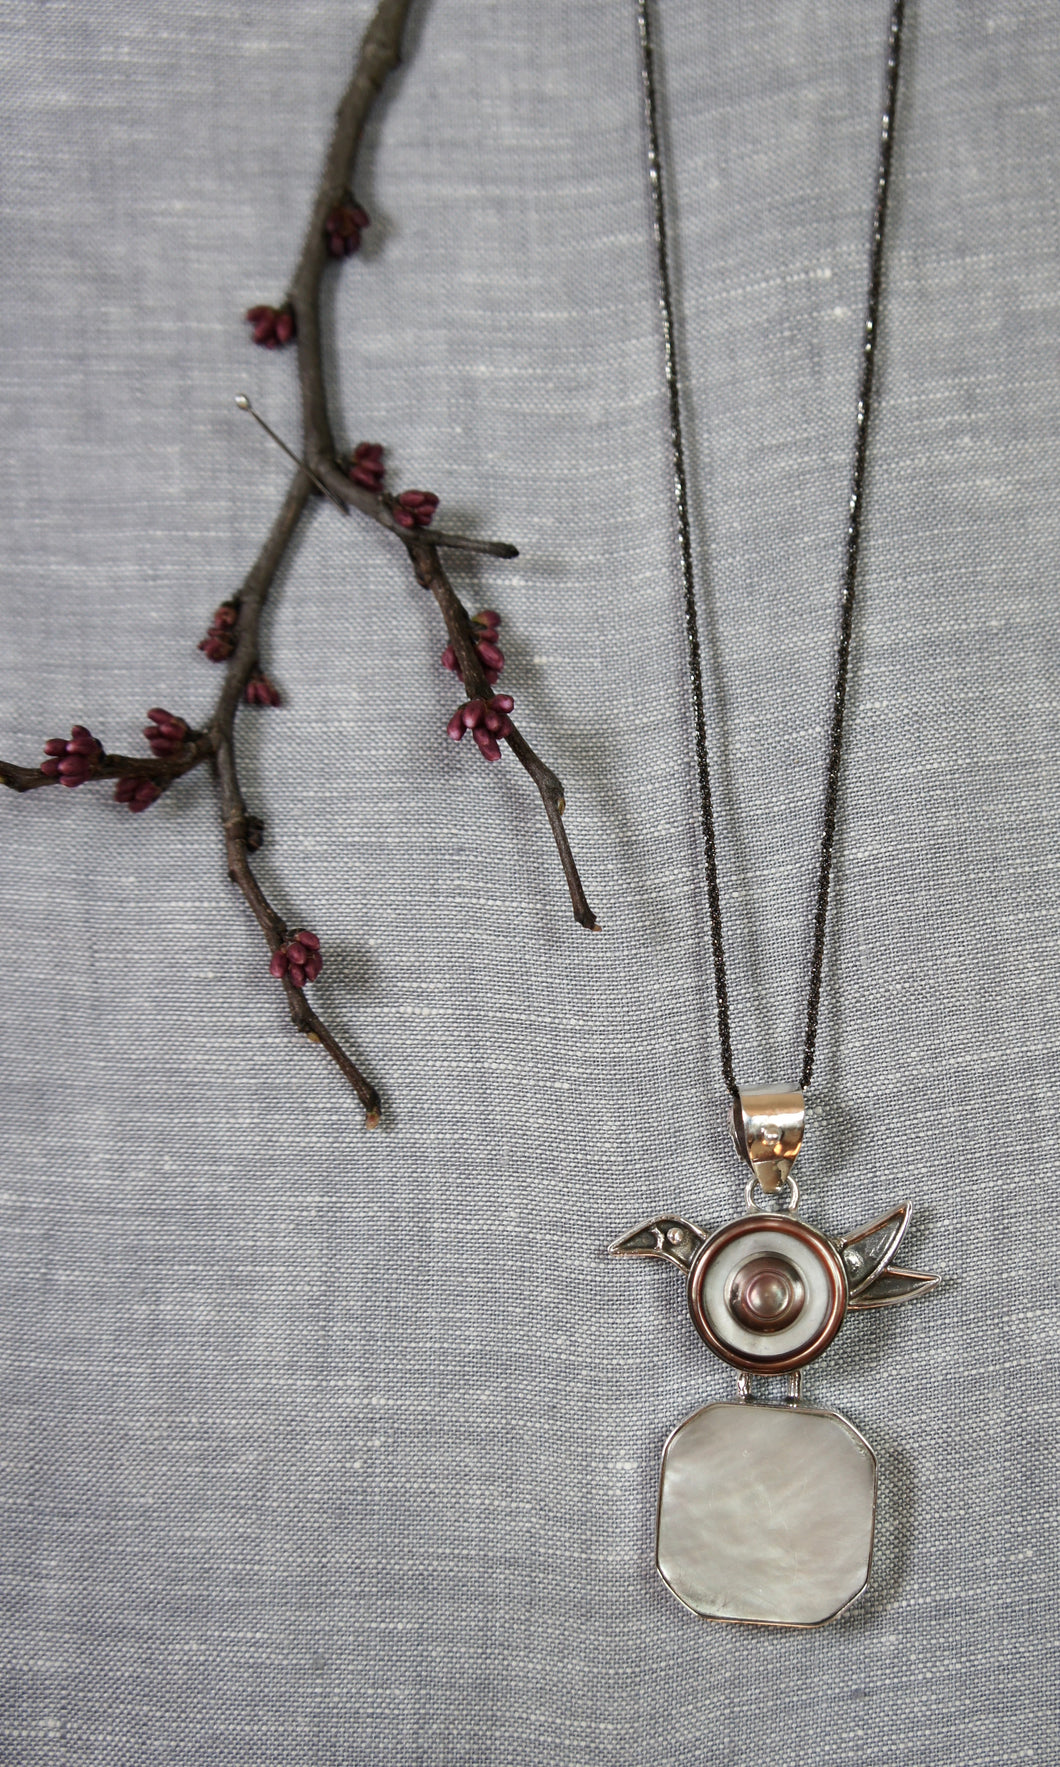 Bird Pendant Necklace